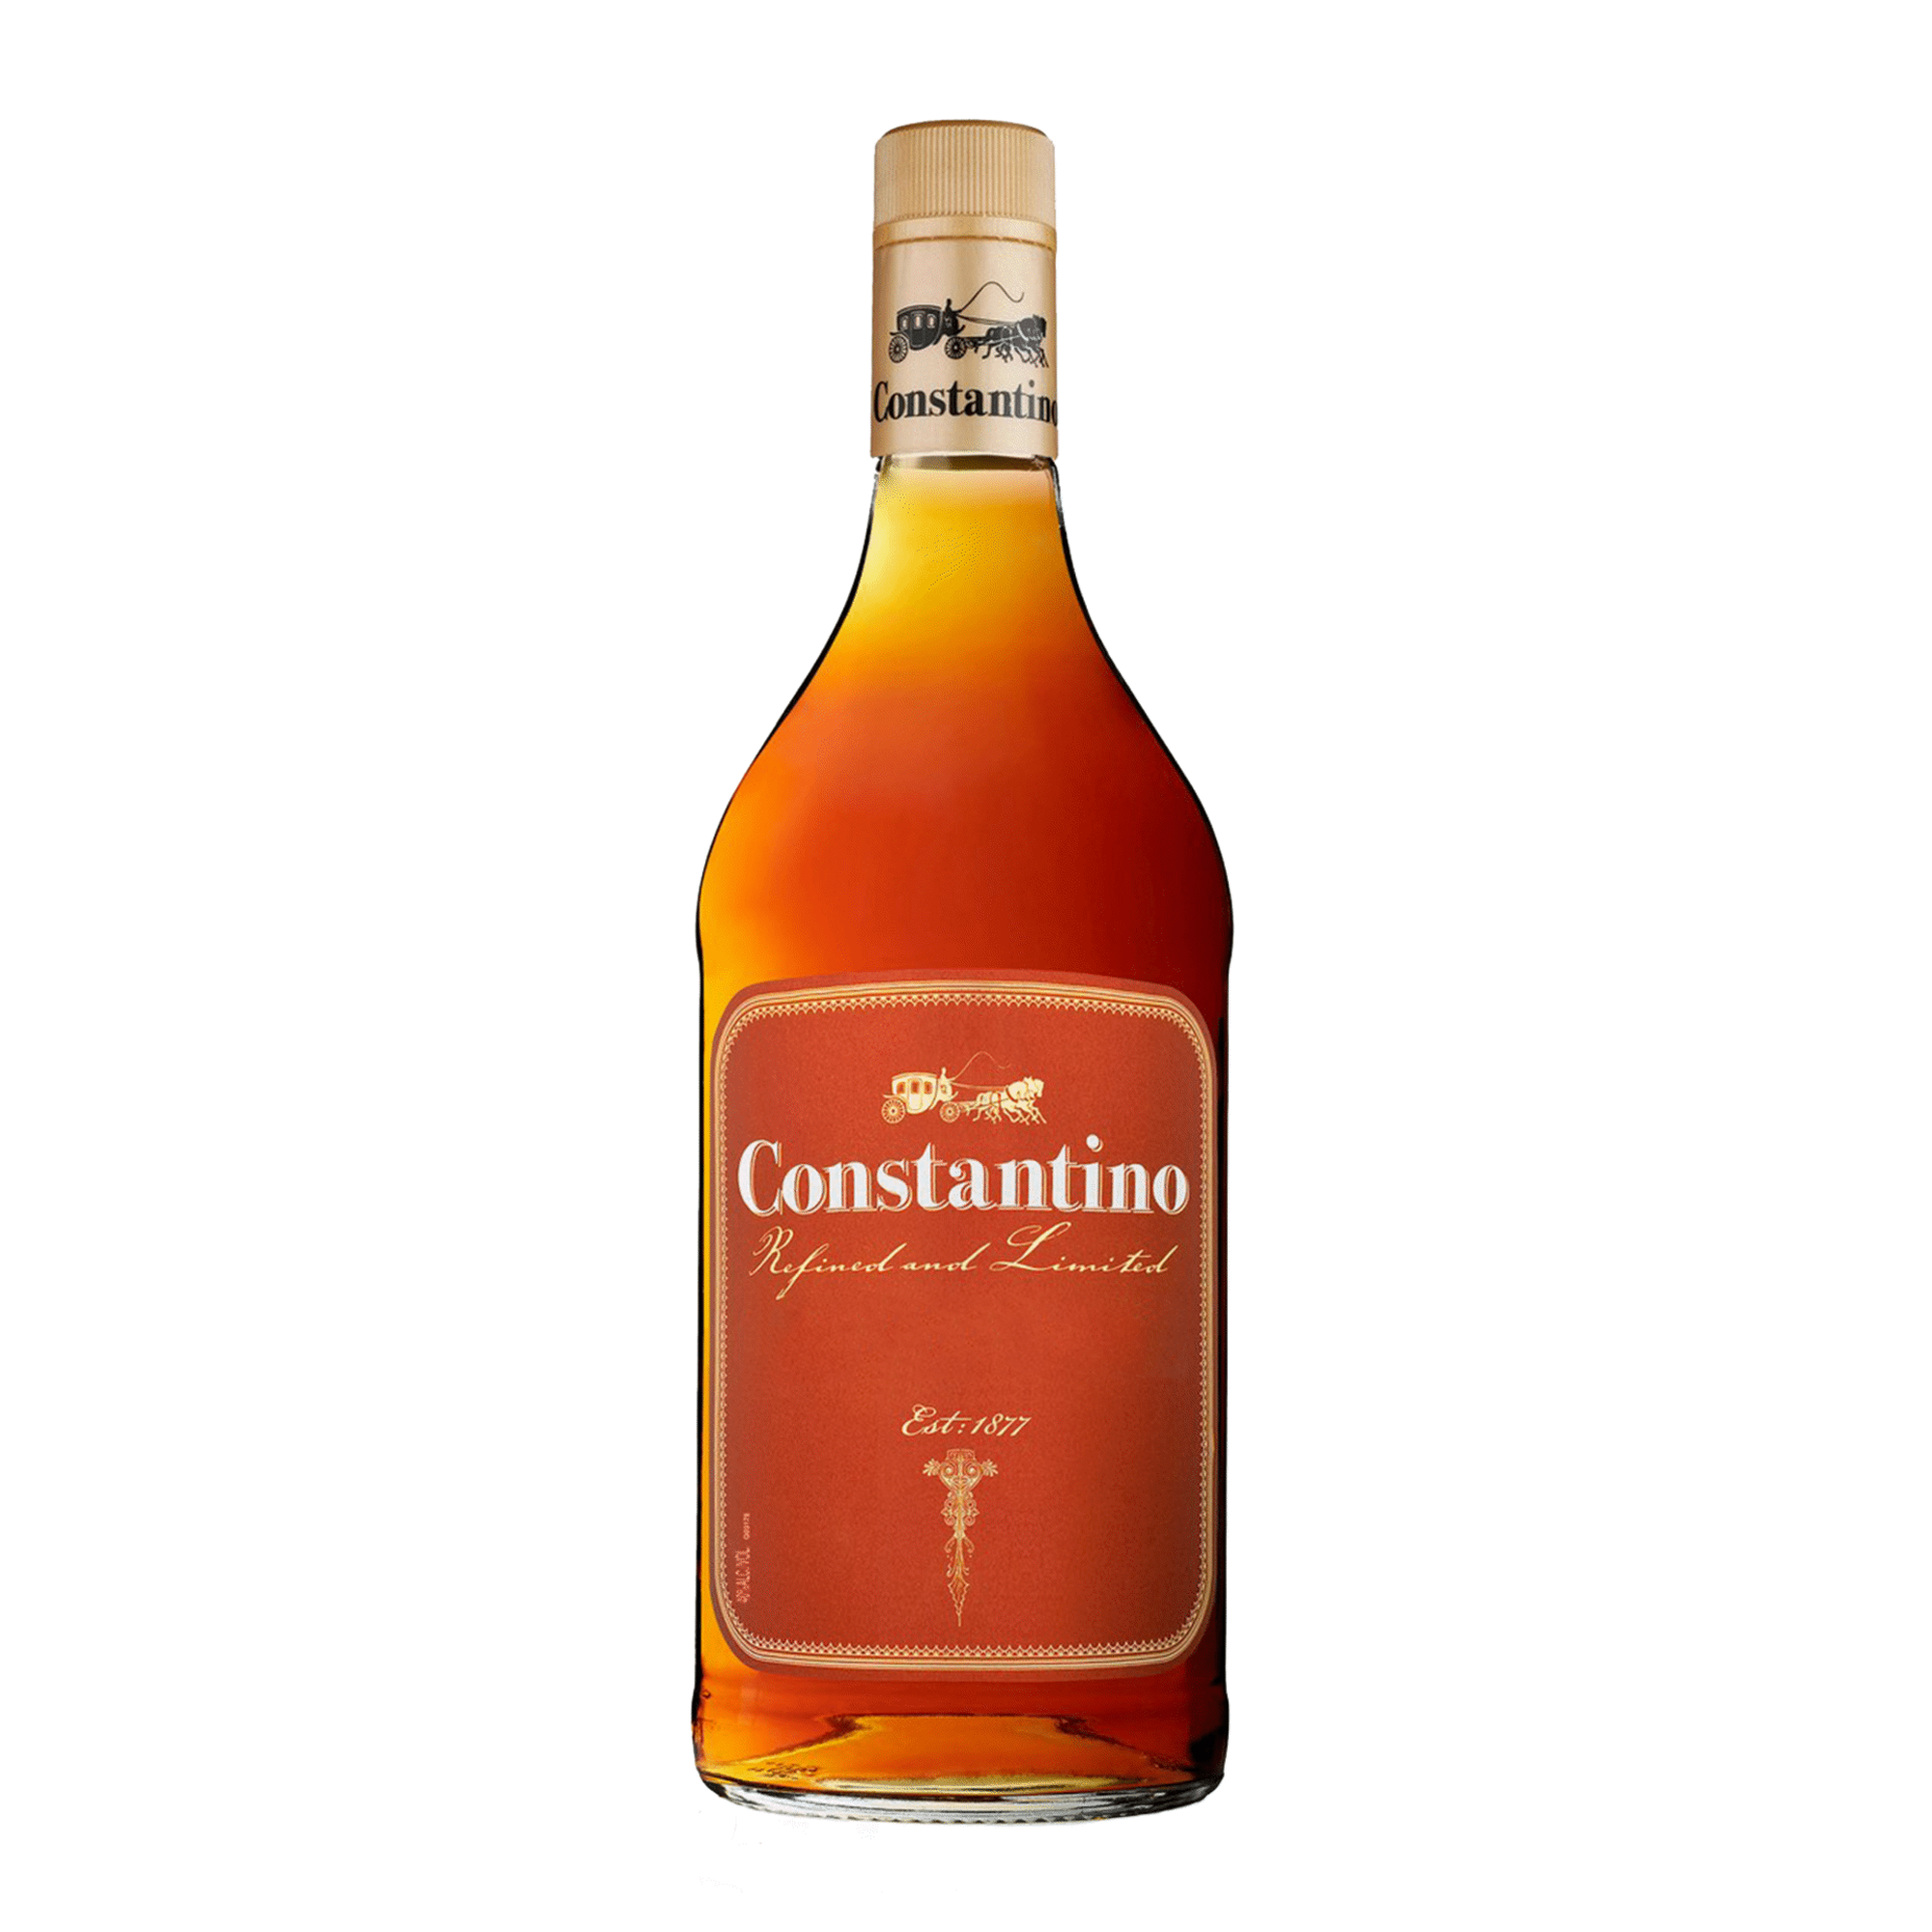 Constantino Bebida Espirituosa